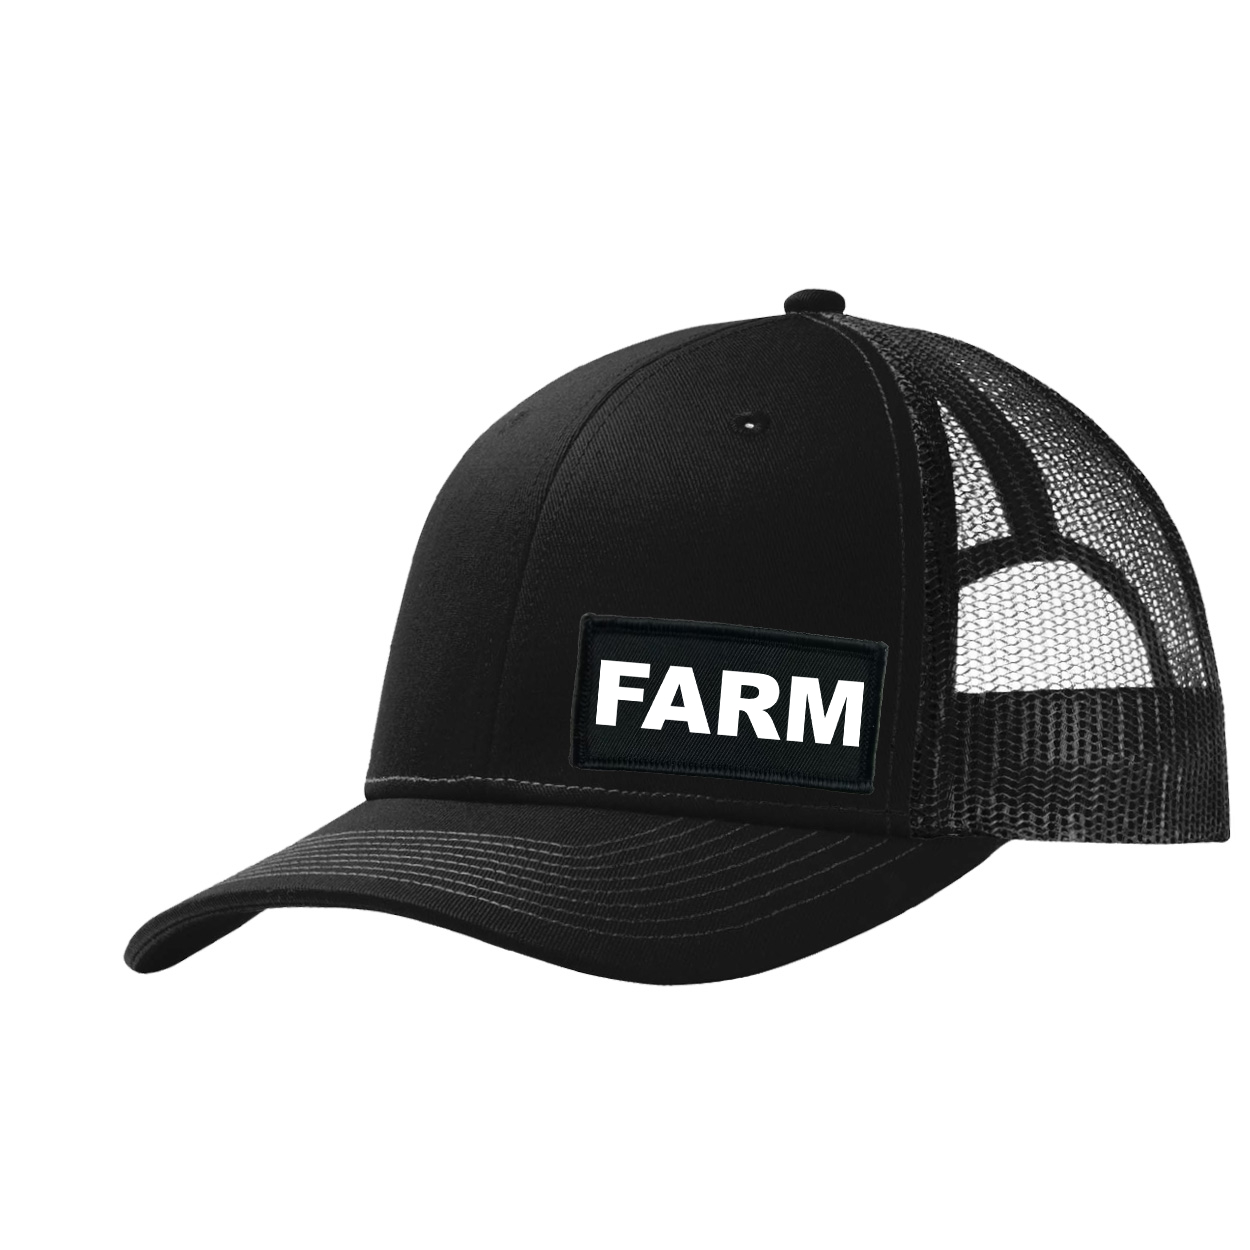 Farm Brand Logo Night Out Woven Patch Snapback Trucker Hat Black (White Logo)